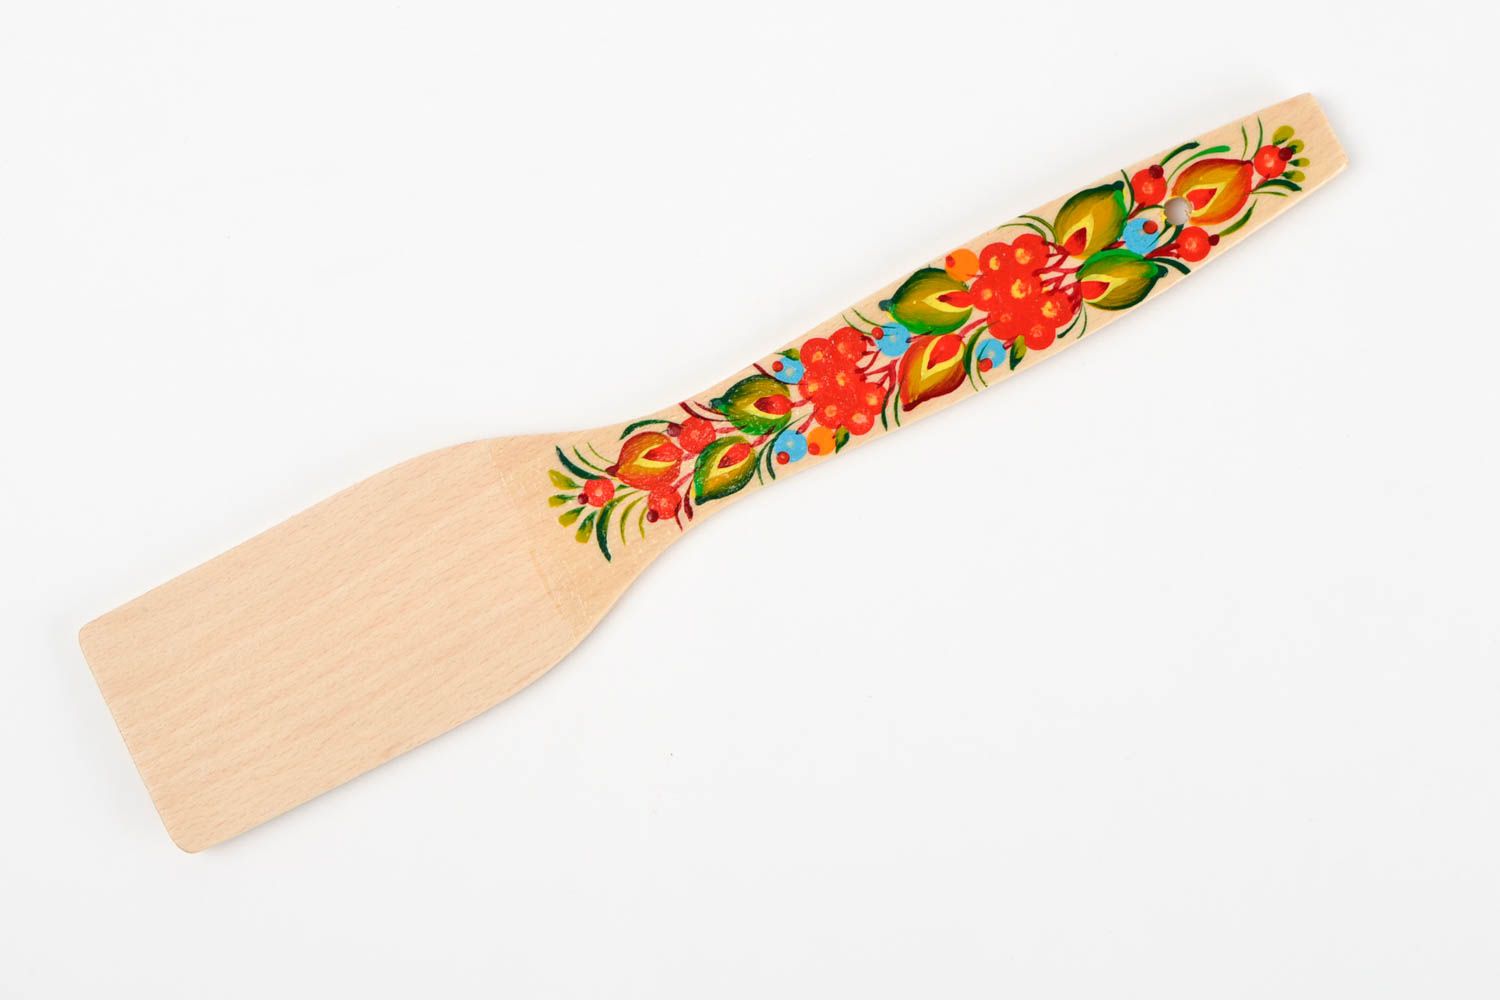 Handmade wooden spatula cooking tools kitchen utensils wood craft ideas photo 3